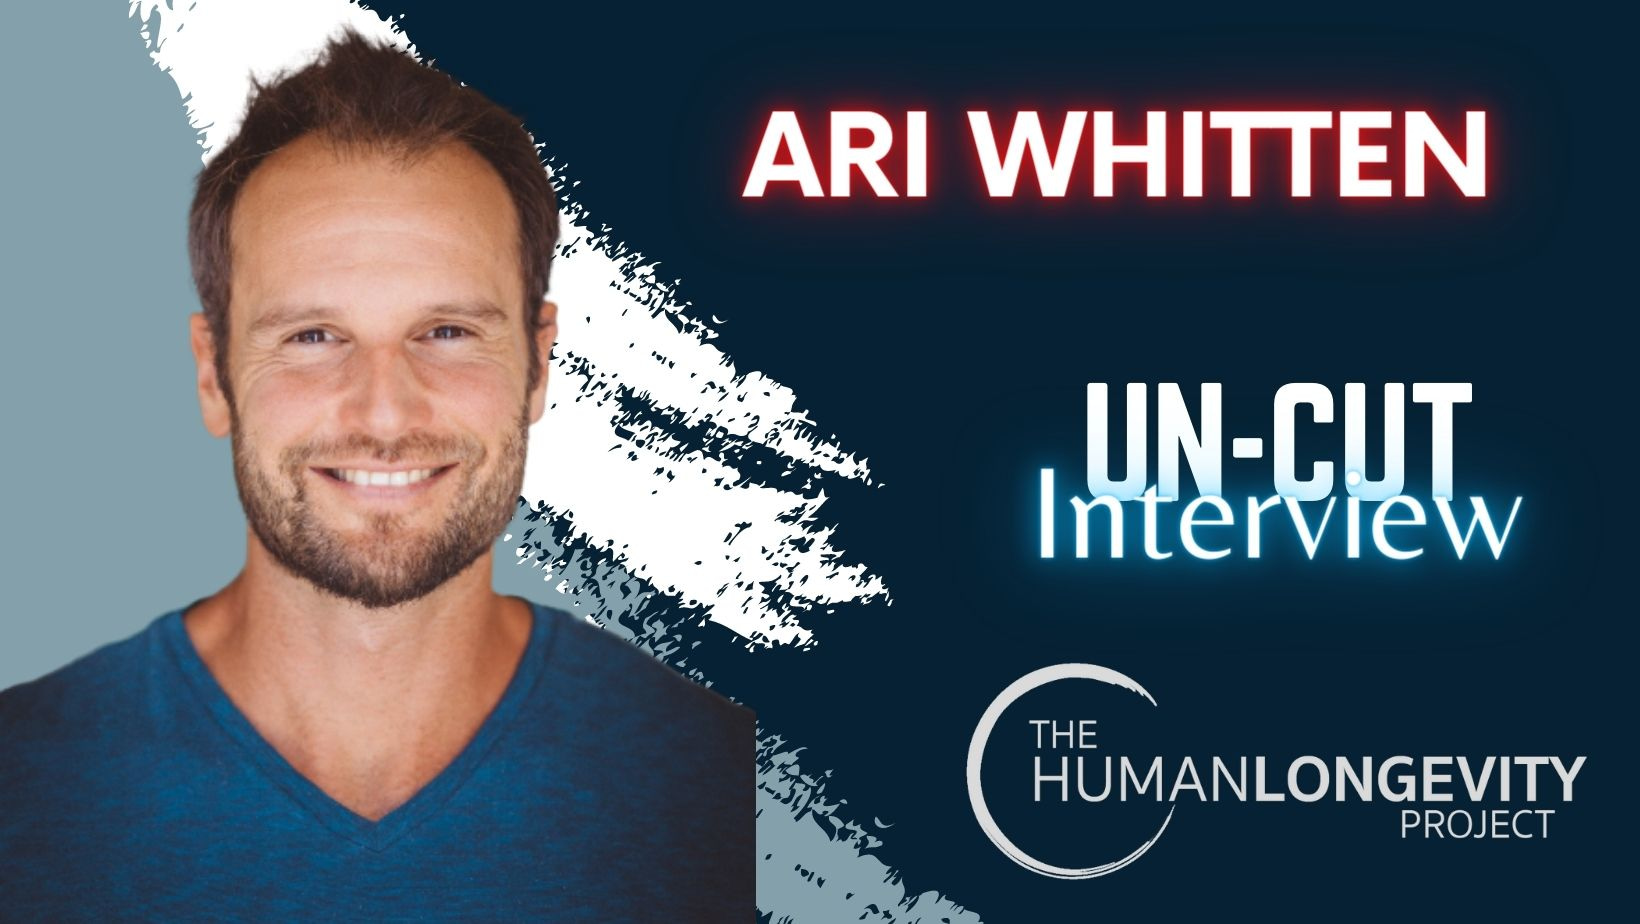 Human Longevity Project Uncut Interview With Ari Whitten